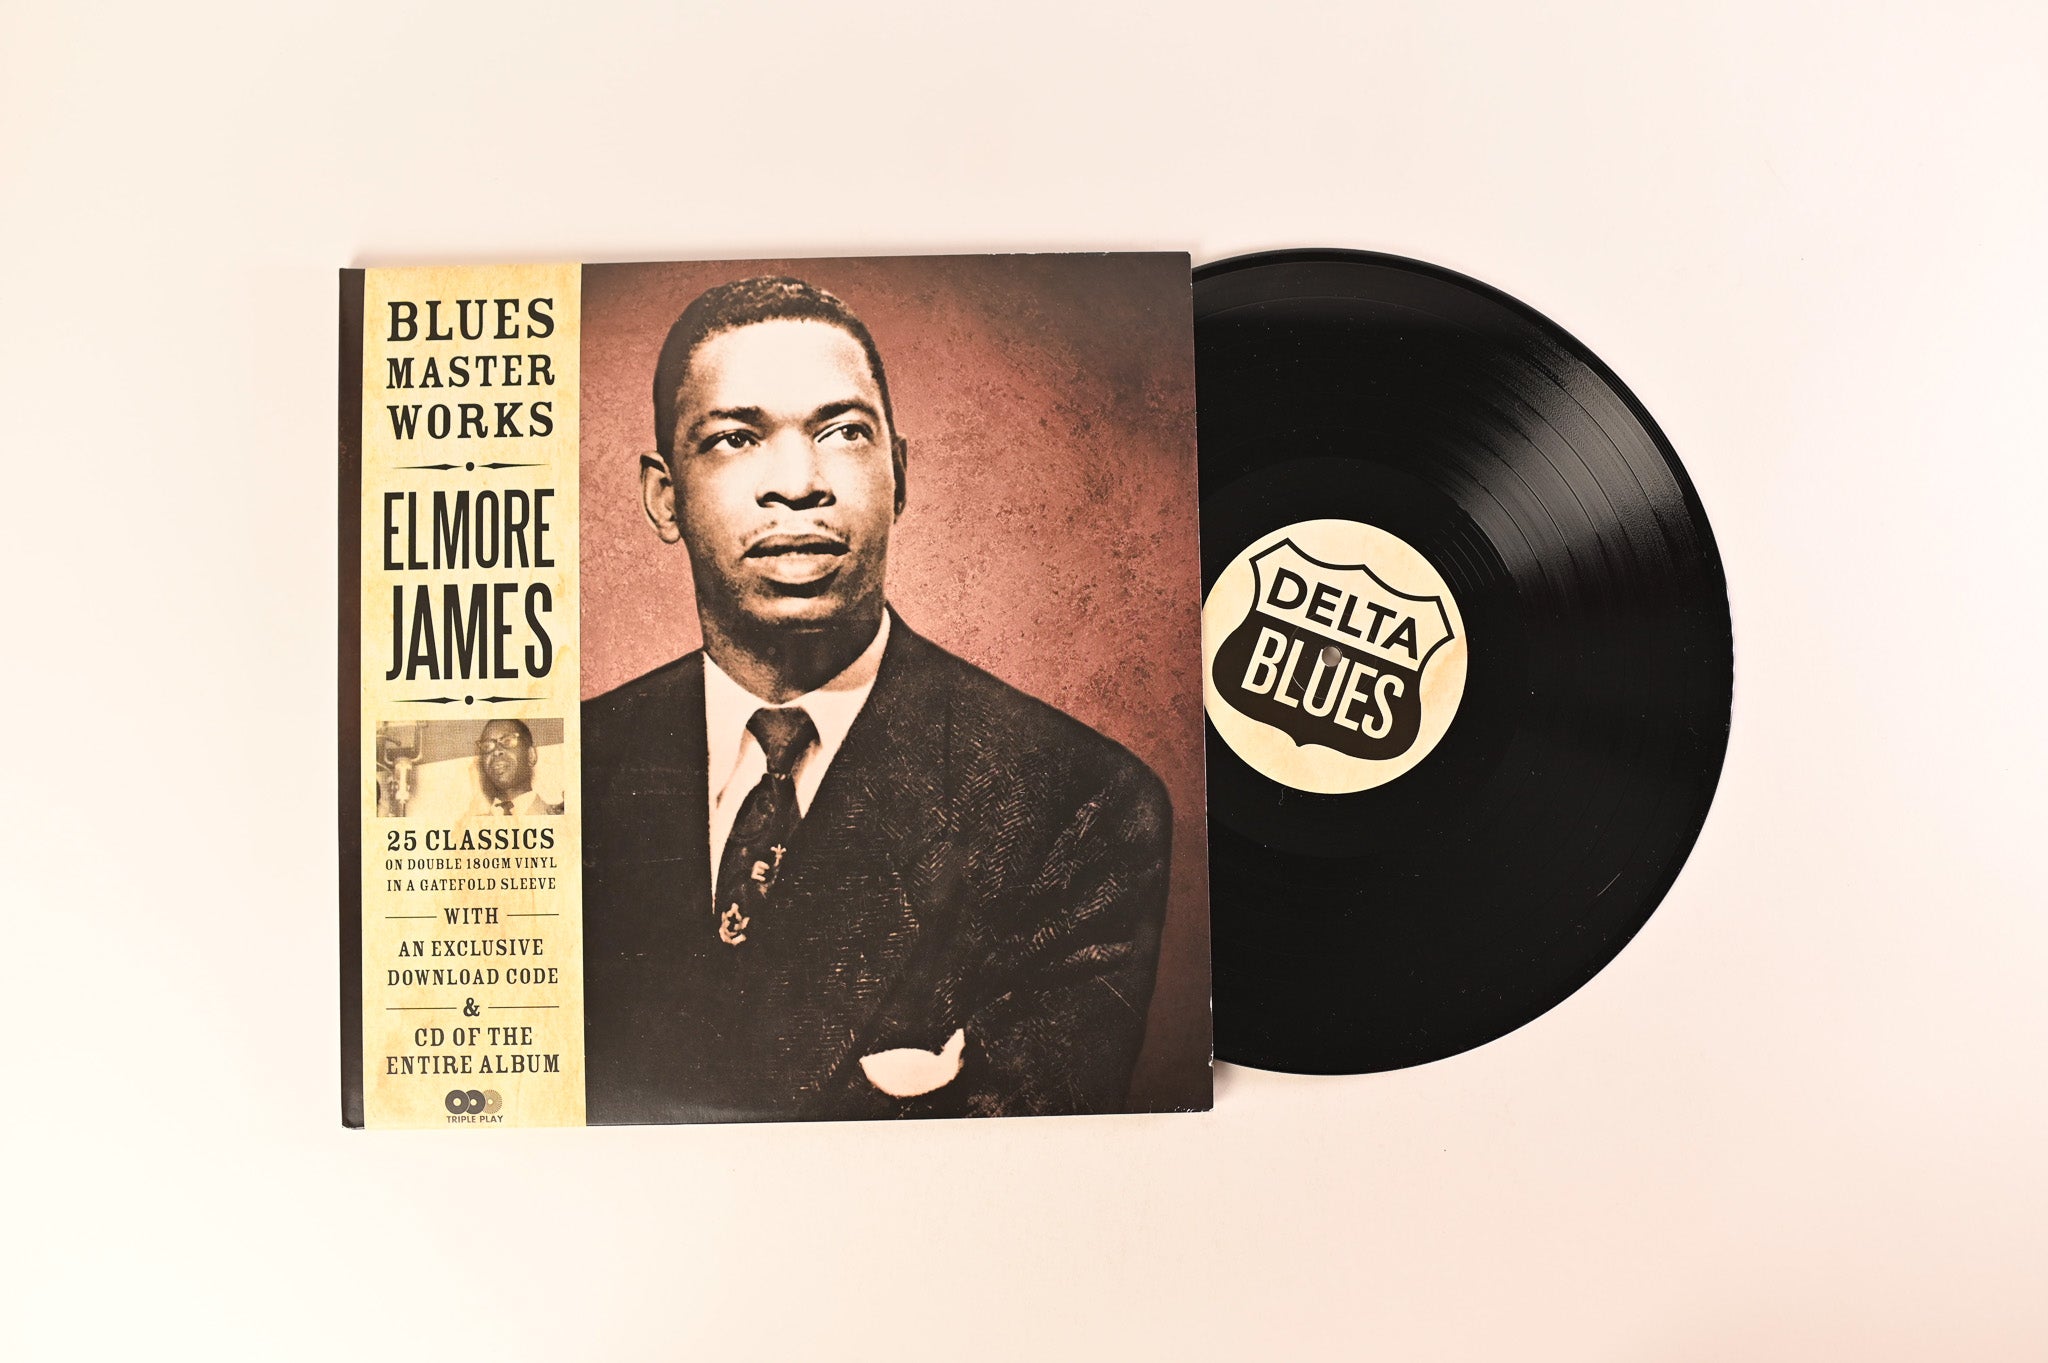 Elmore James - Blues Master Works on Delta Blues 180 Gram